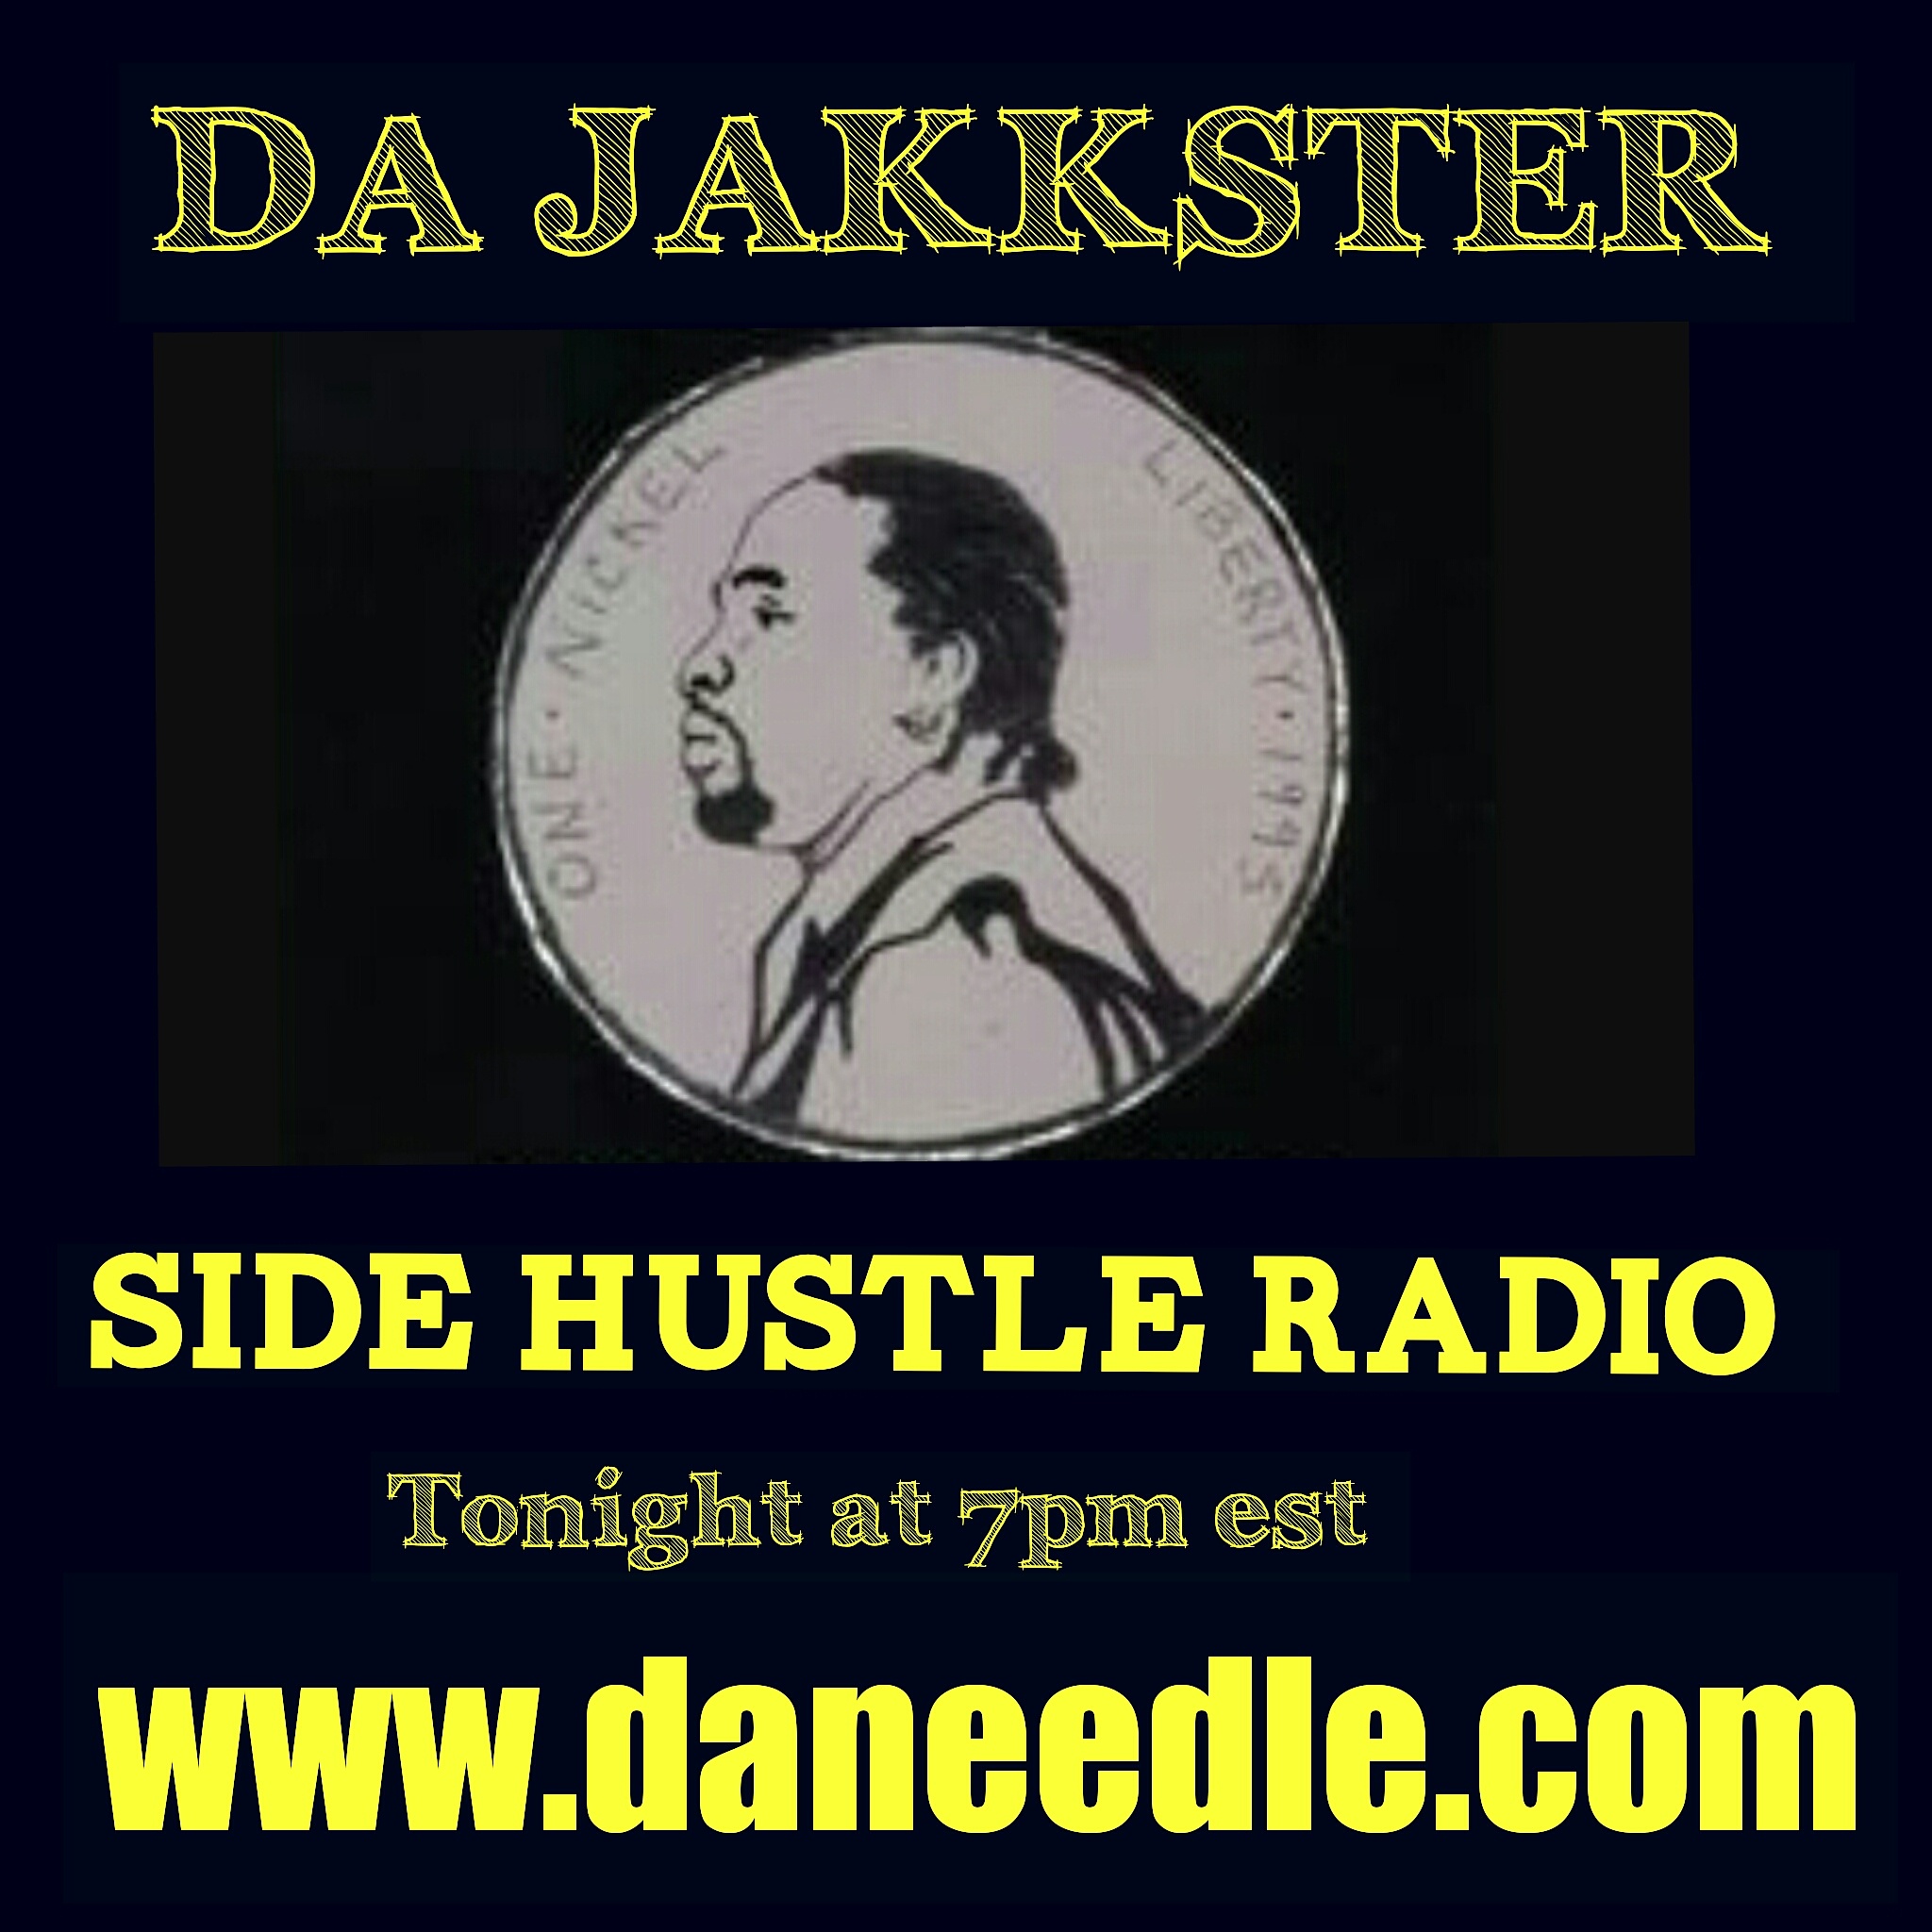 Side Hustle Radio with Da Jakkester